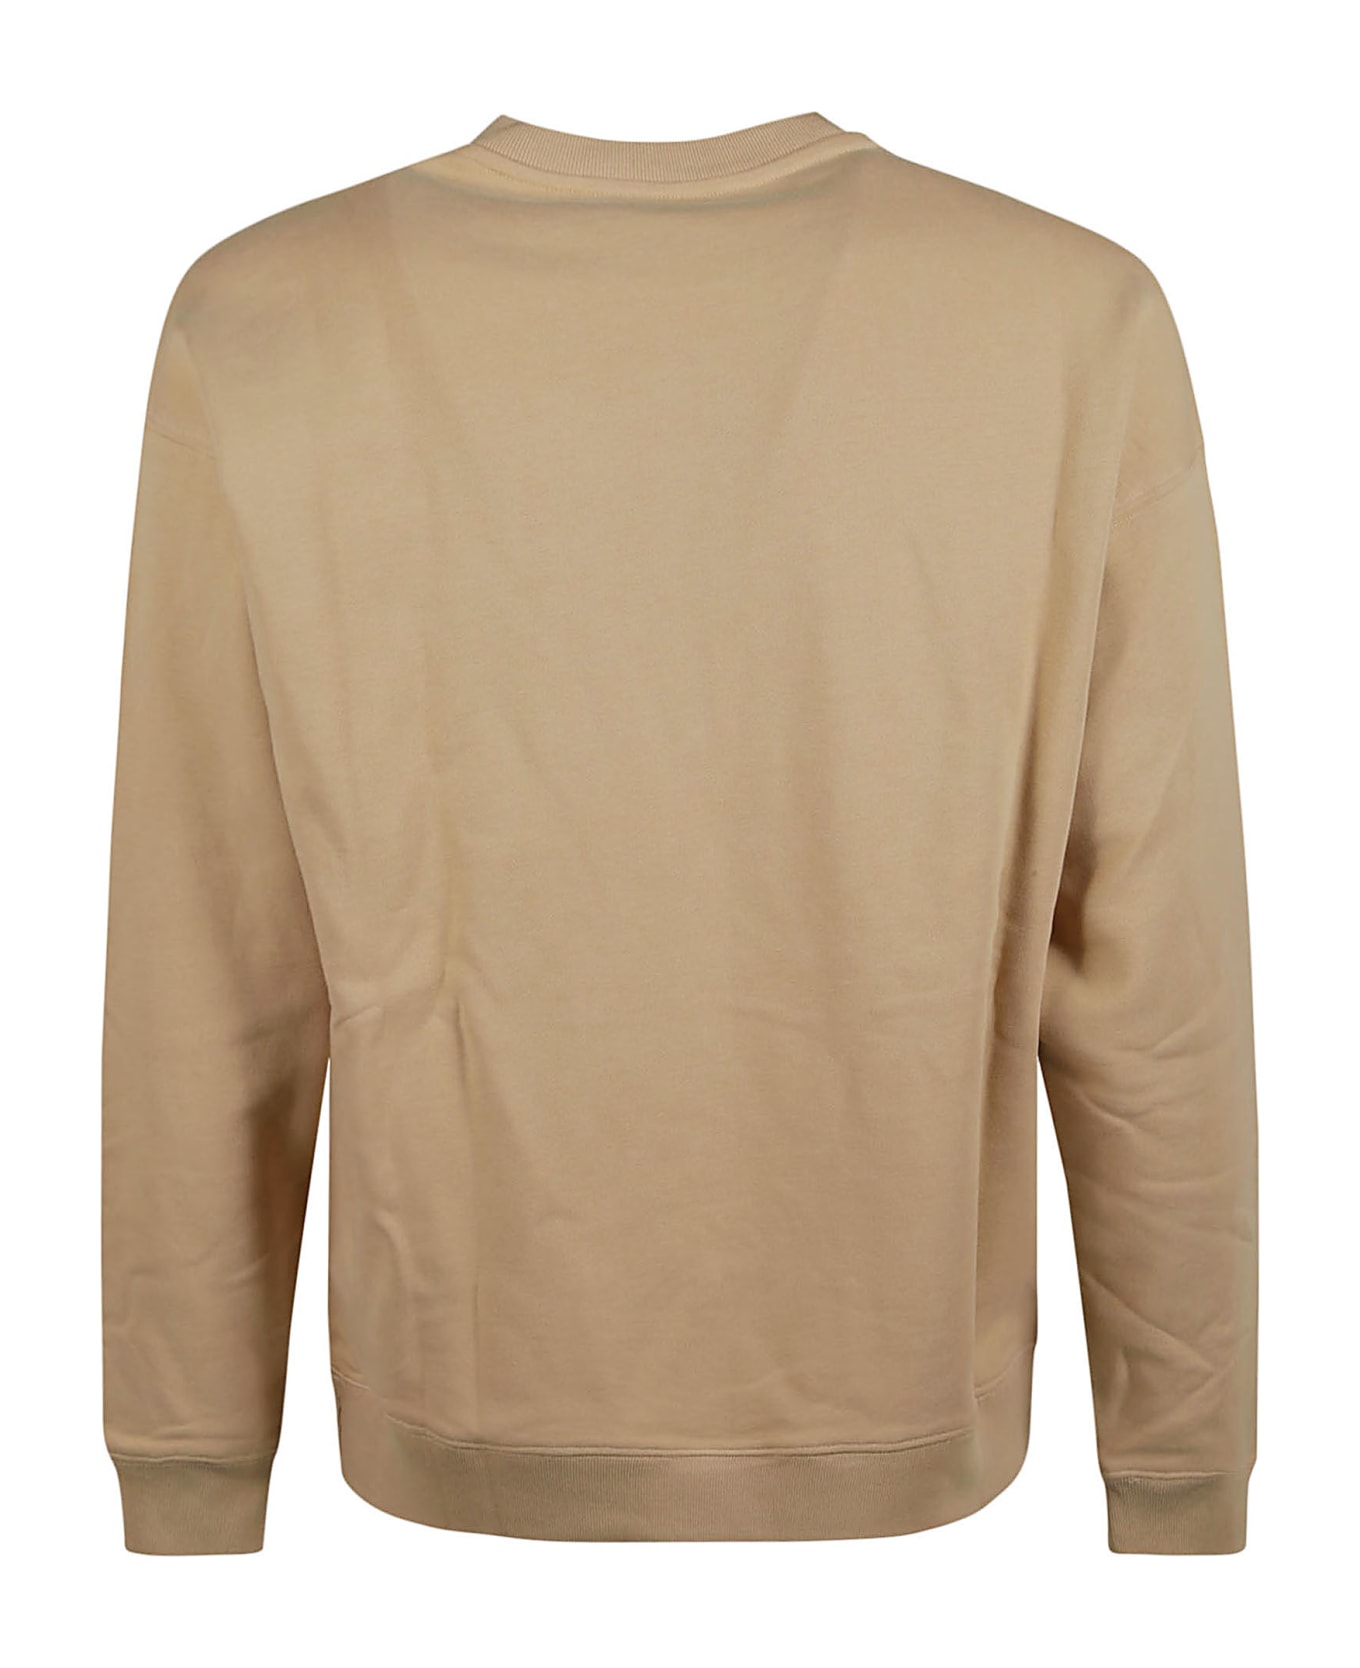 Moschino Logo Sweatshirt - Beige フリース